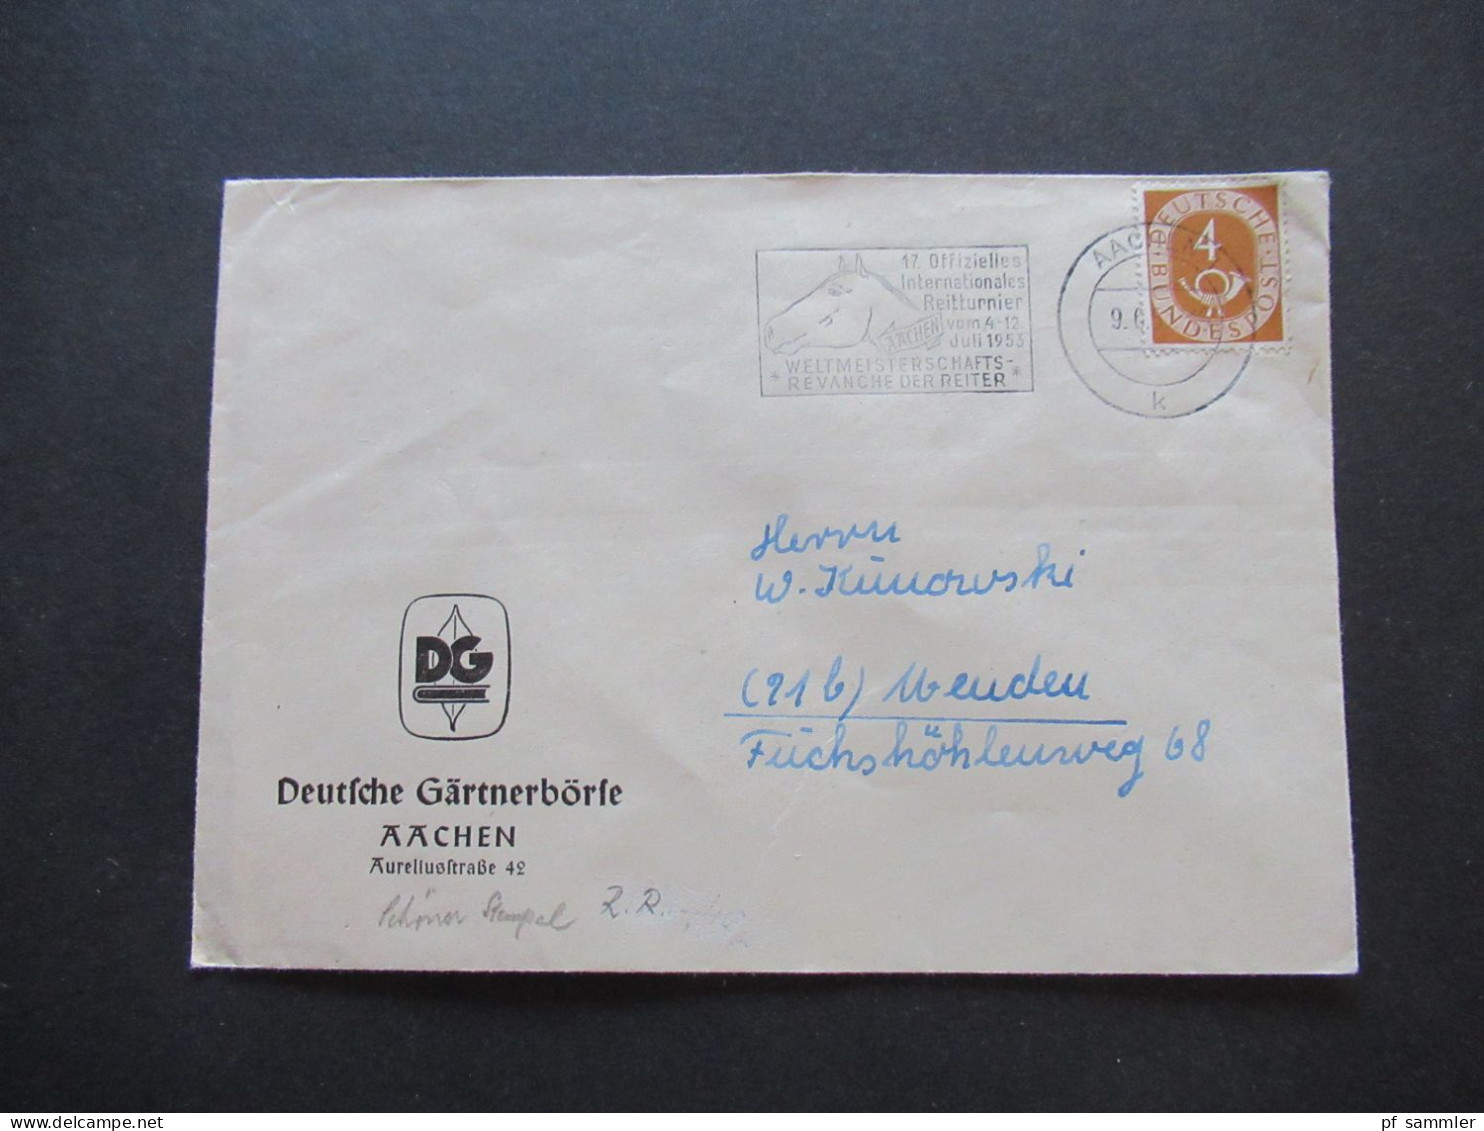 BRD 1951 Posthorn Nr.124 EF Mit MS Aachen 17. Offizielles Int. Reitturnier Weltmeisterschafts Revanche Der Reiter - Covers & Documents